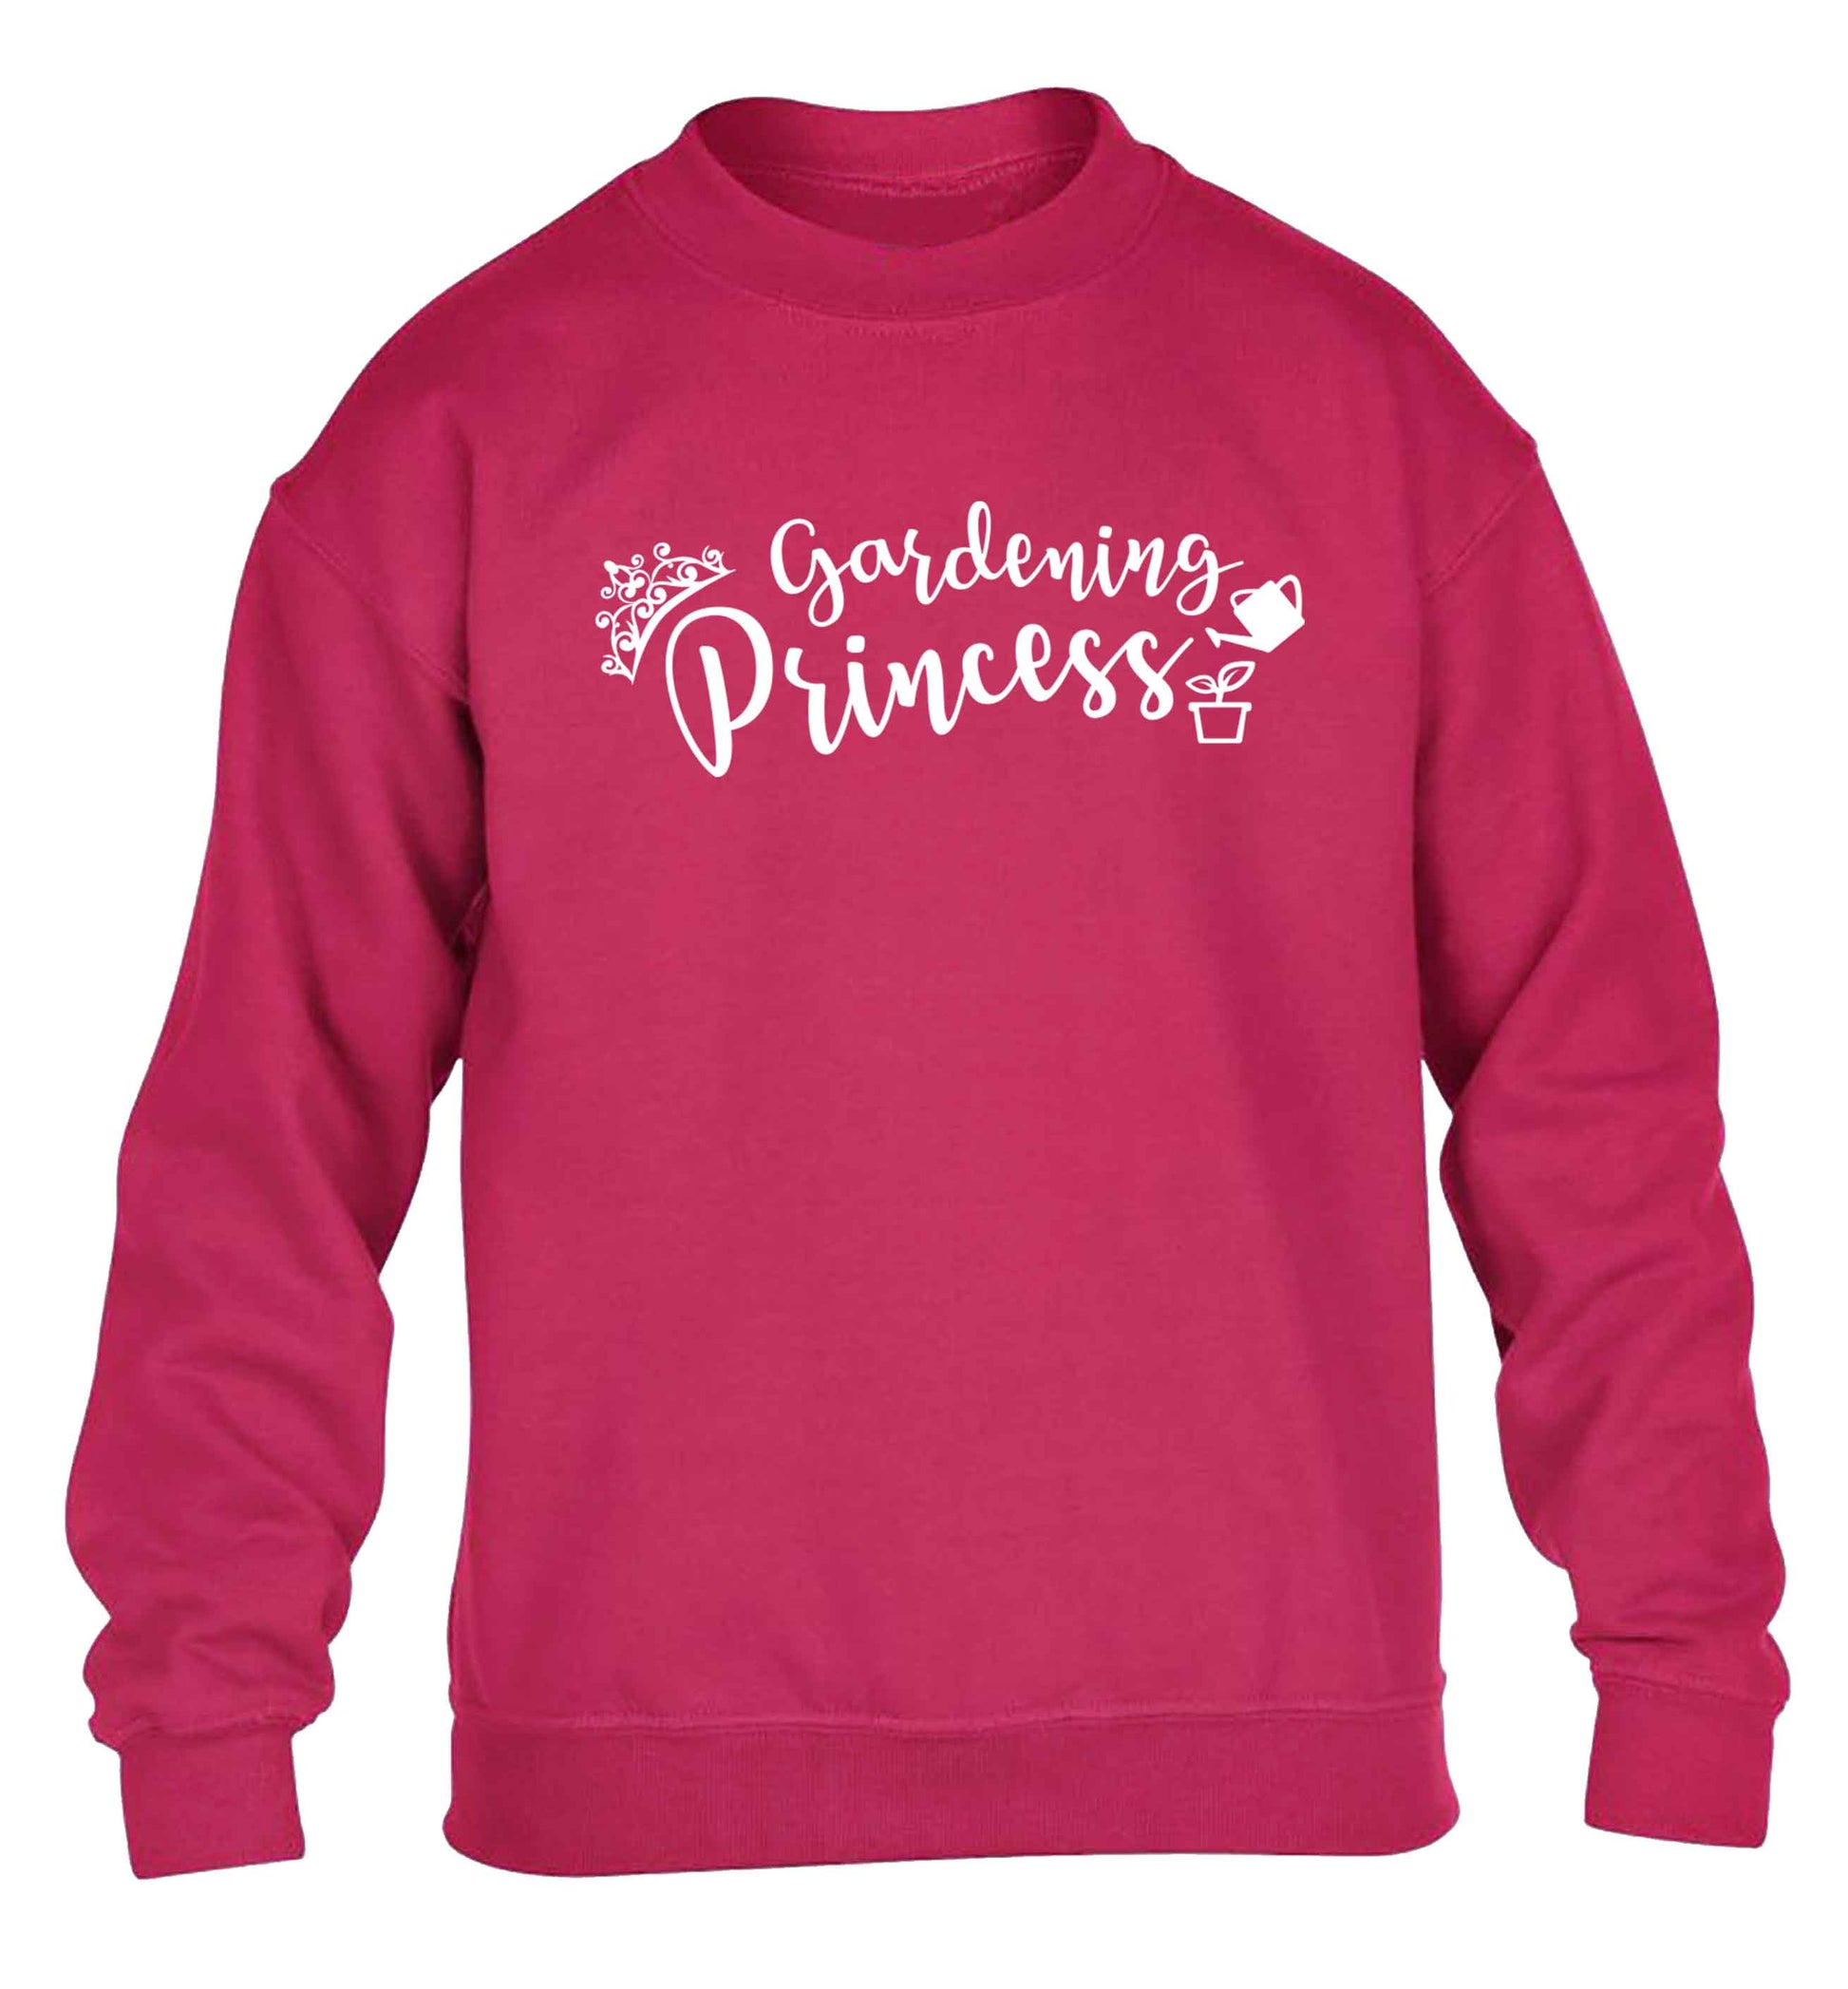 Gardening princess children's pink sweater 12-13 Years